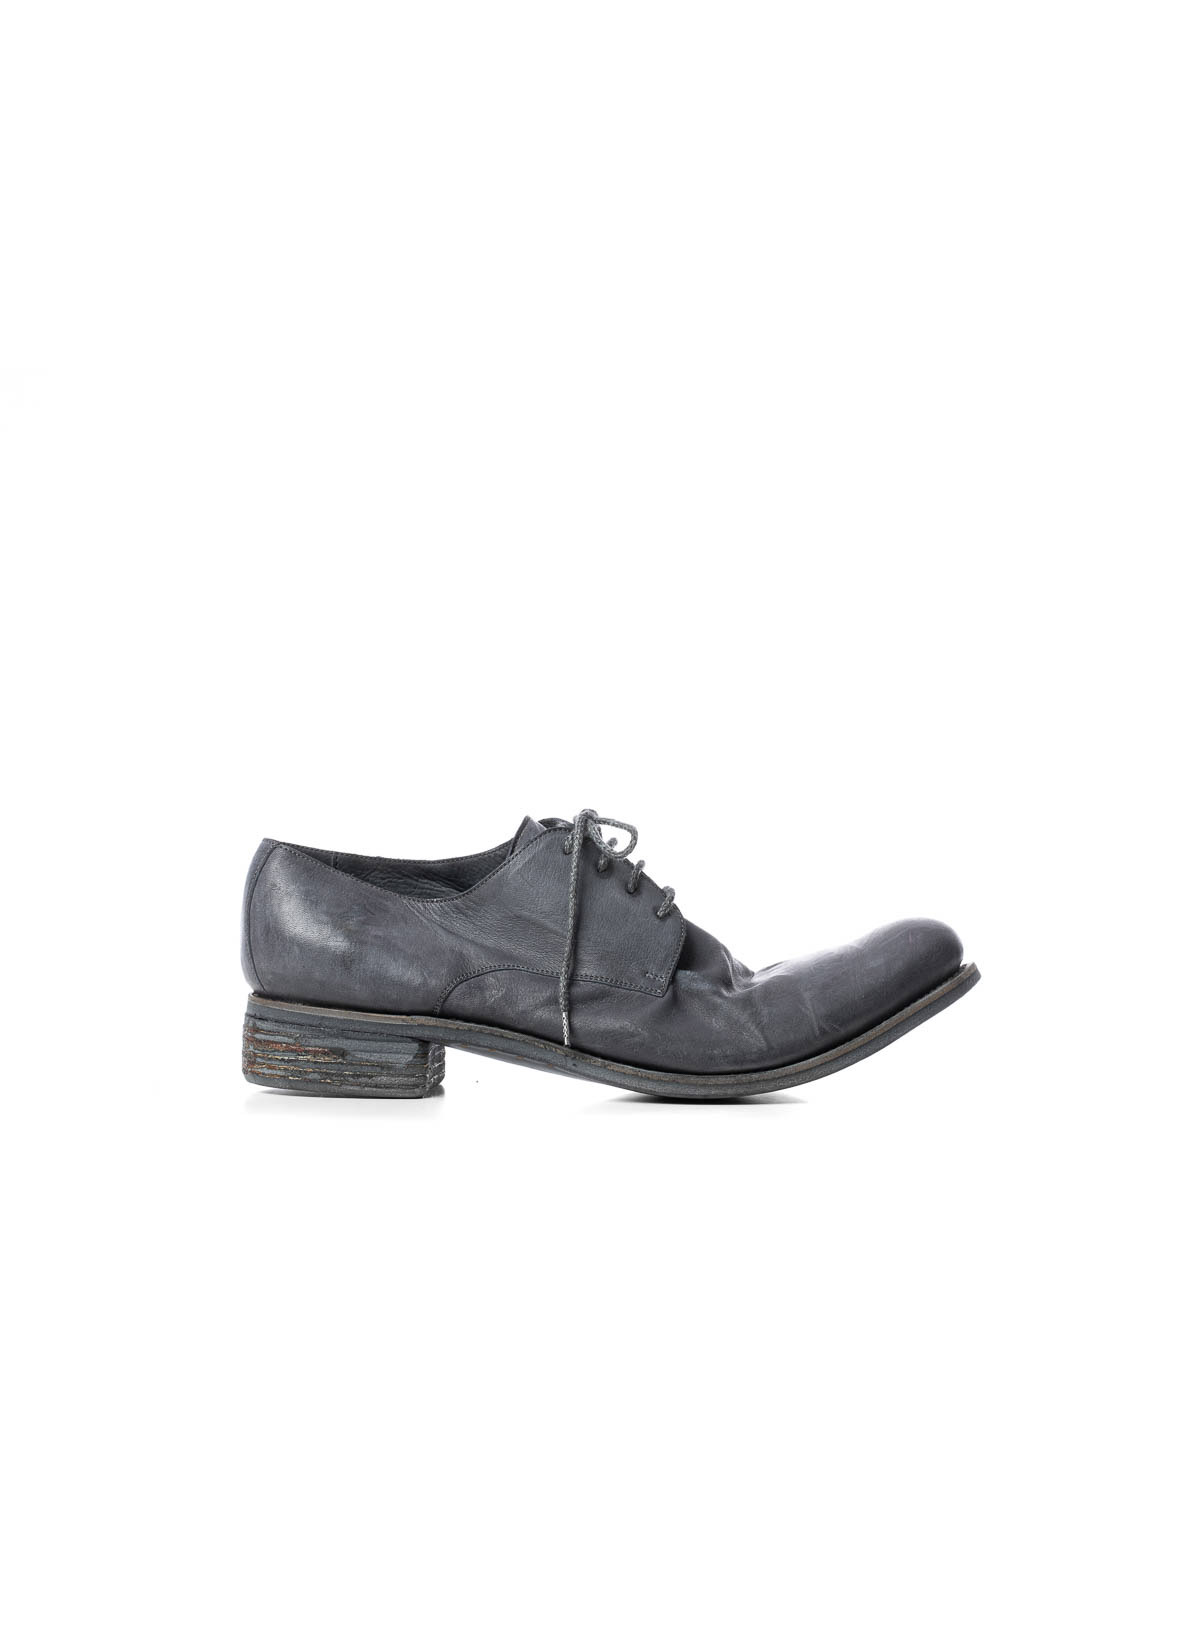 hide-m | ADICIANNOVEVENTITRE Men Derby Shoe 033N, dark grey